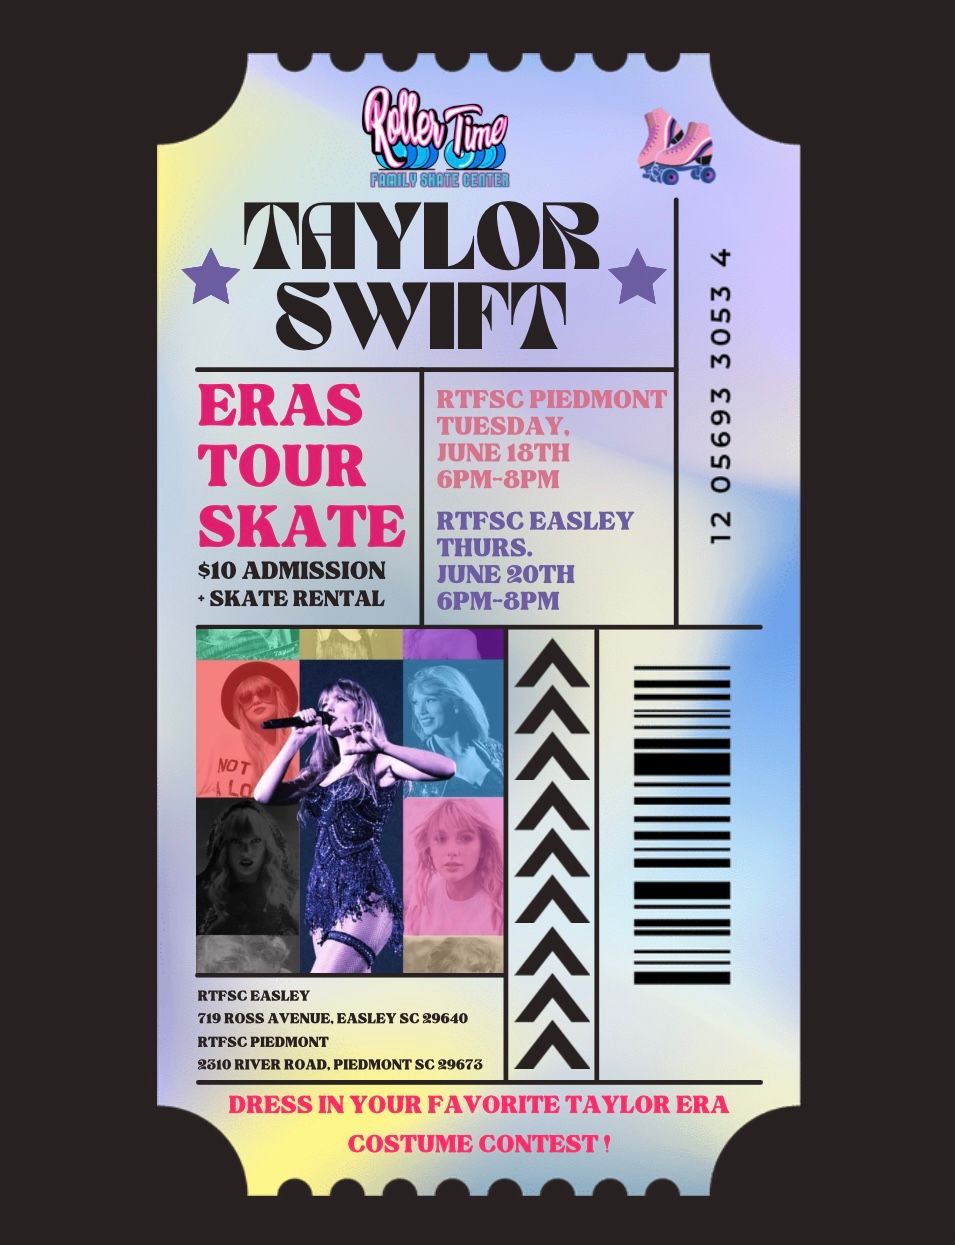 Taylor Swift Eras Tour Skate ??